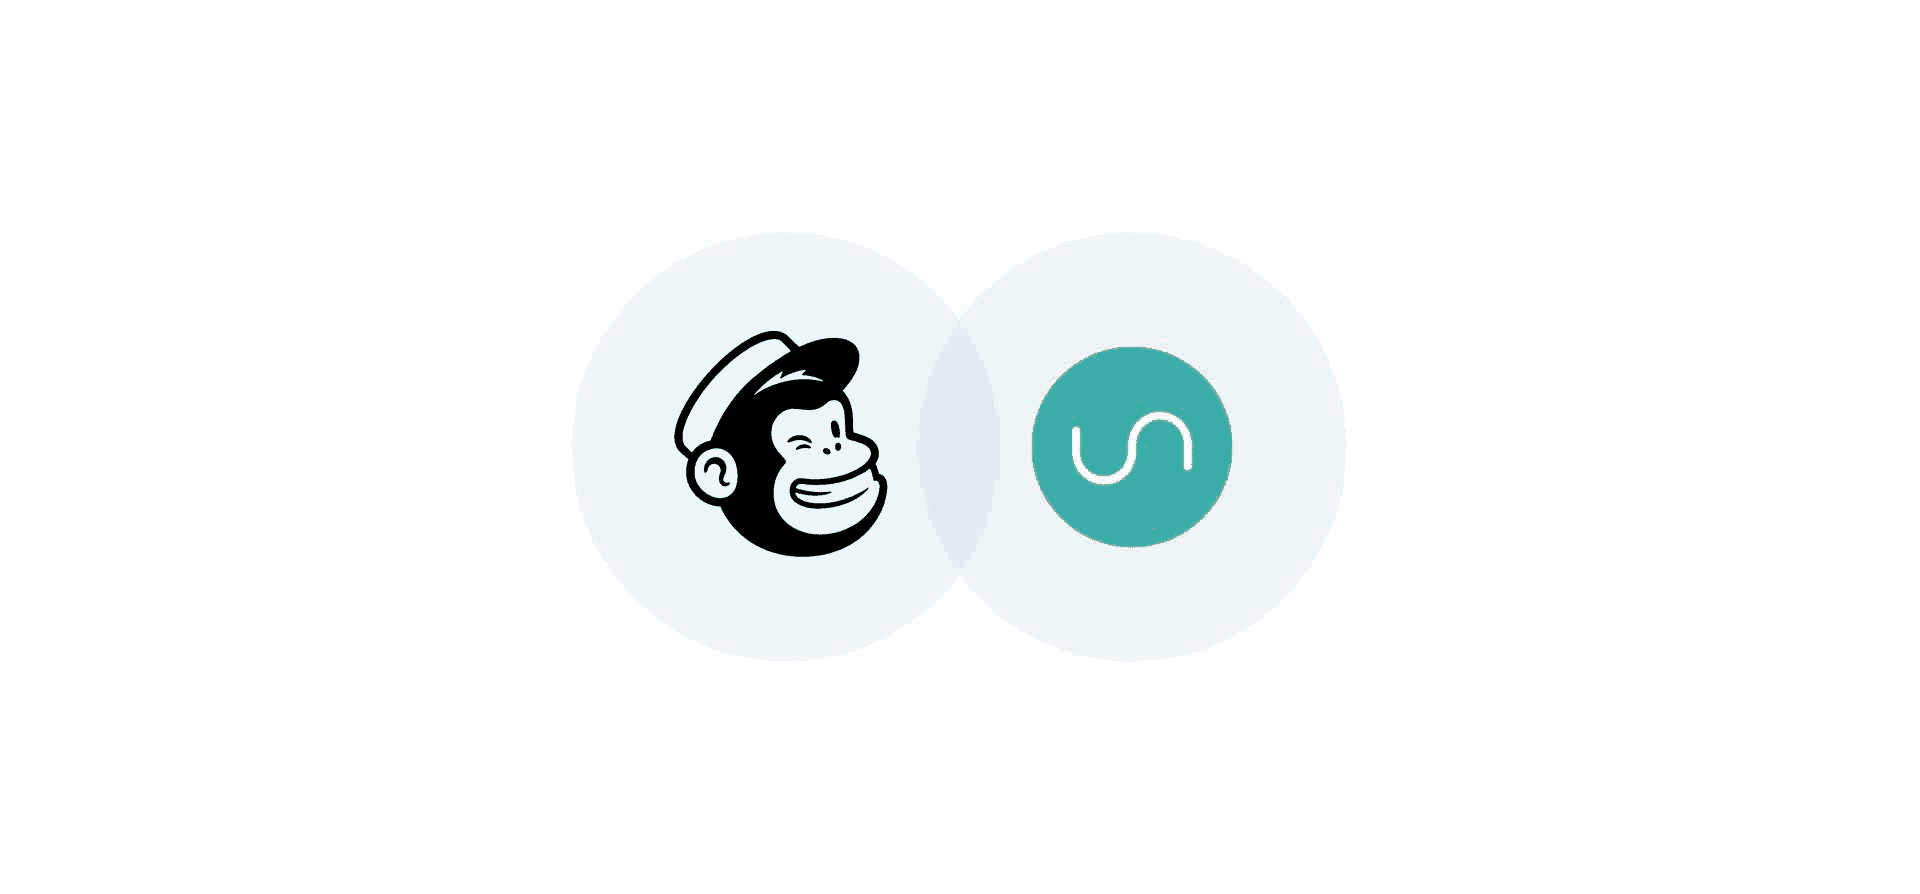 Logos for Mailchimp and Unito, representing Unito's new Mailchimp integration.